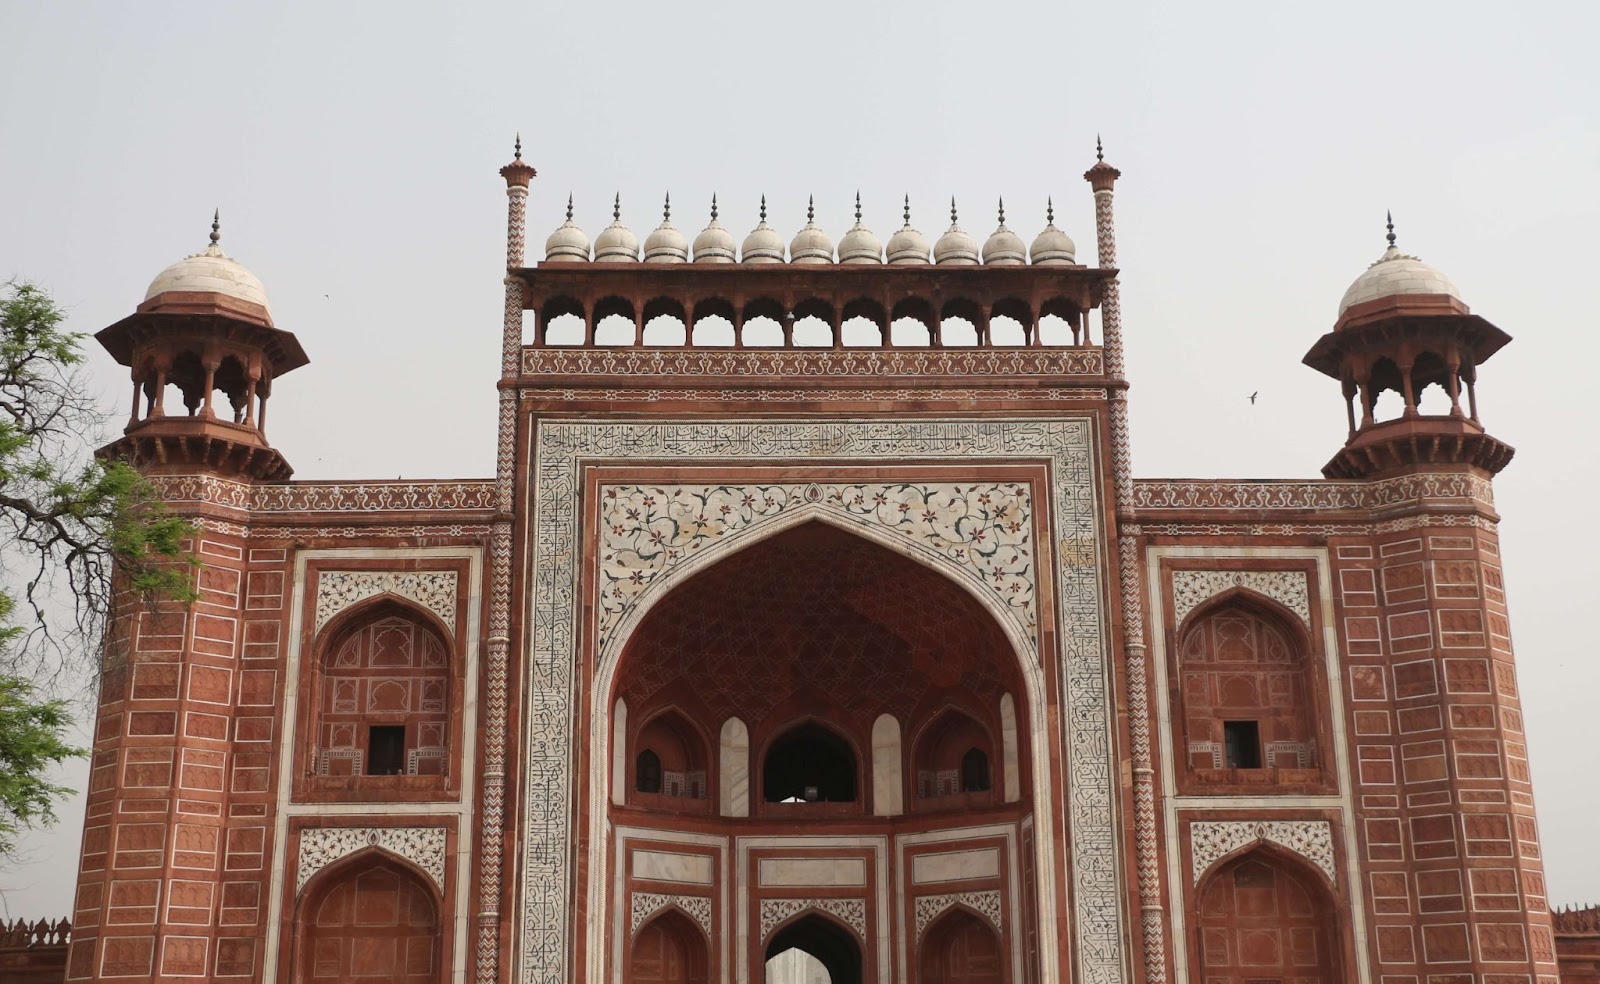 1 day in Agra, the Great Gate of the Taj, Darwaza-i-Rauza